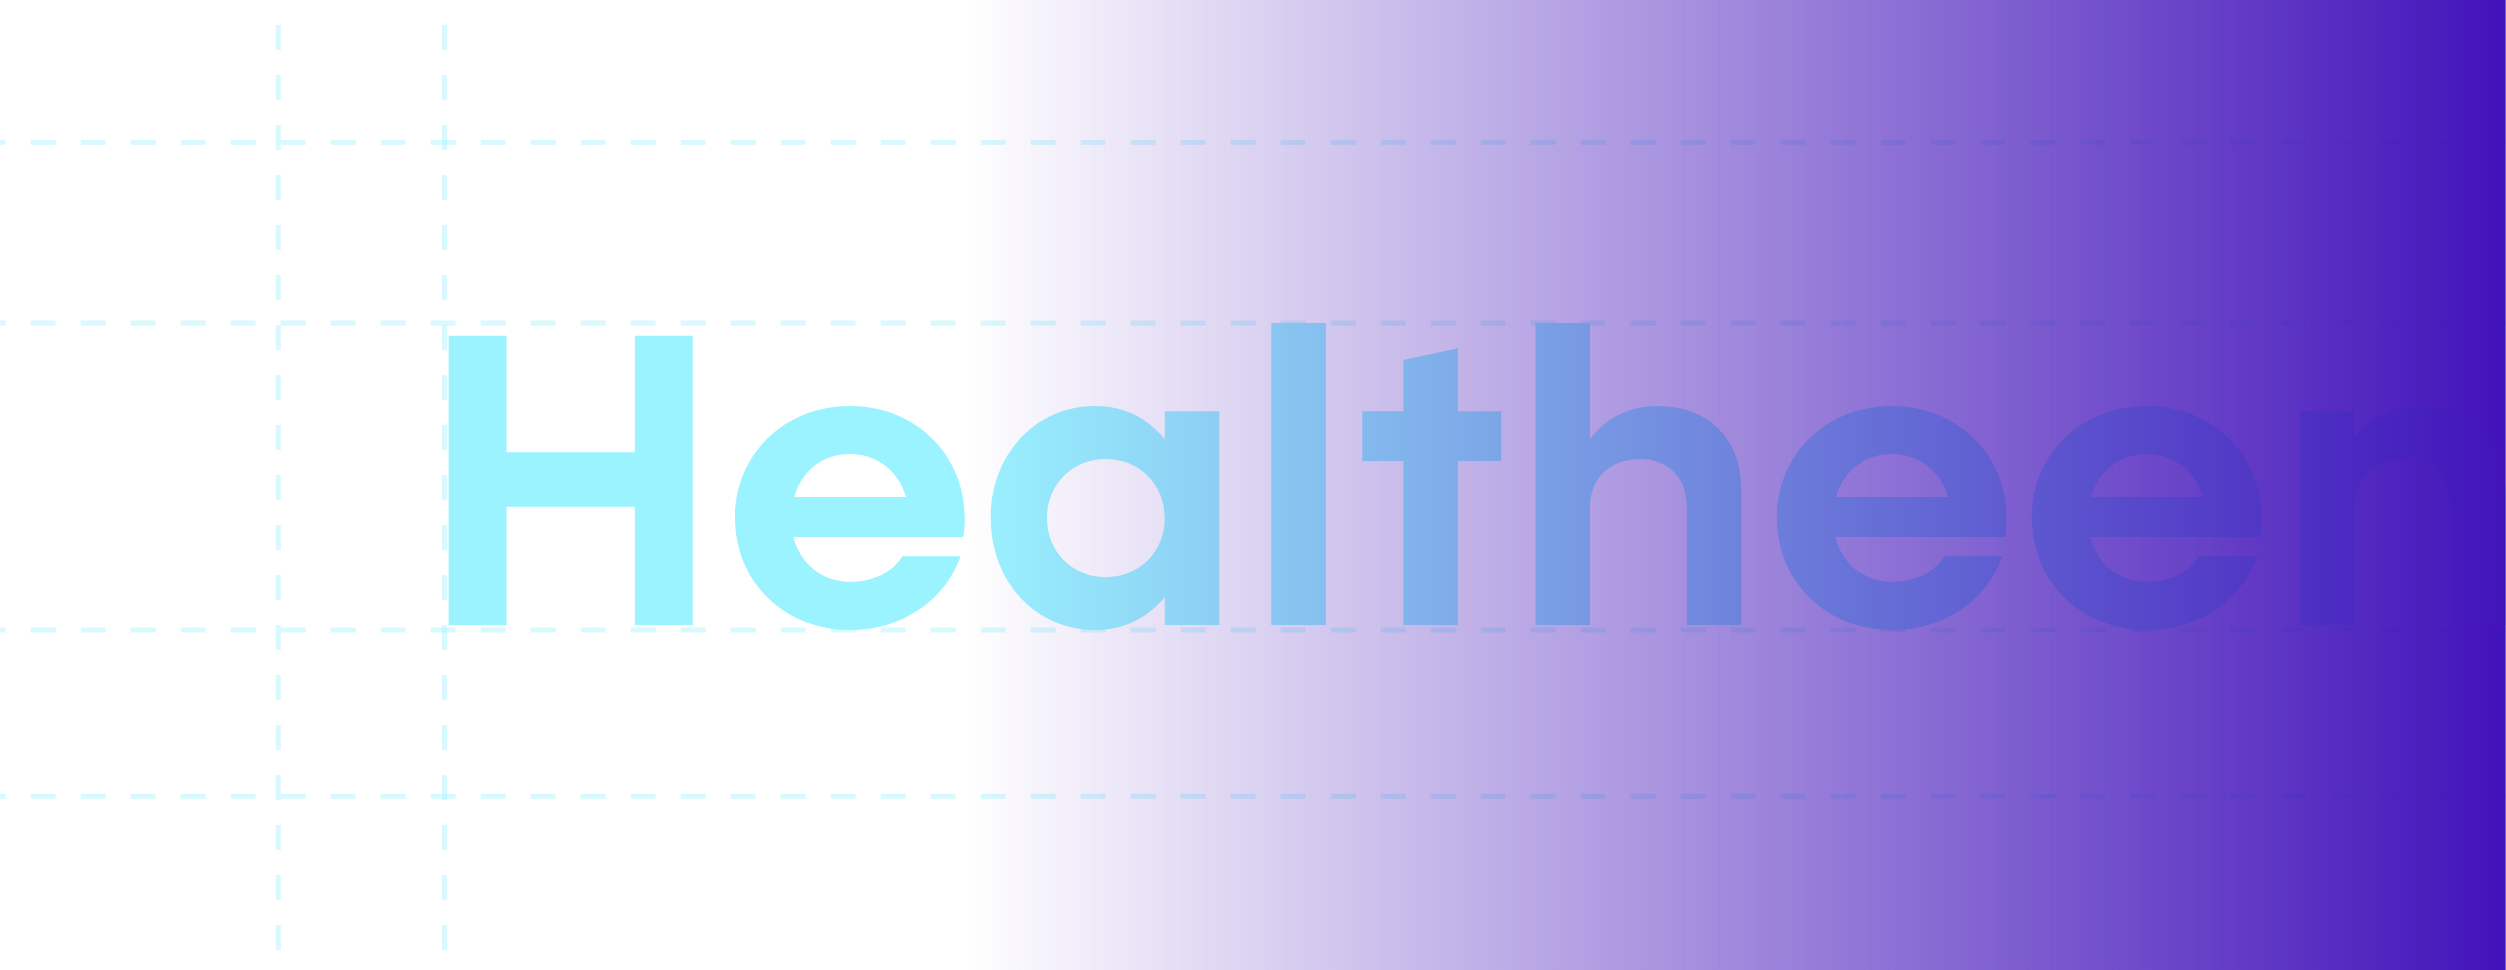 patrick_morvan_UI_Designer_Healtheen_Logo_2